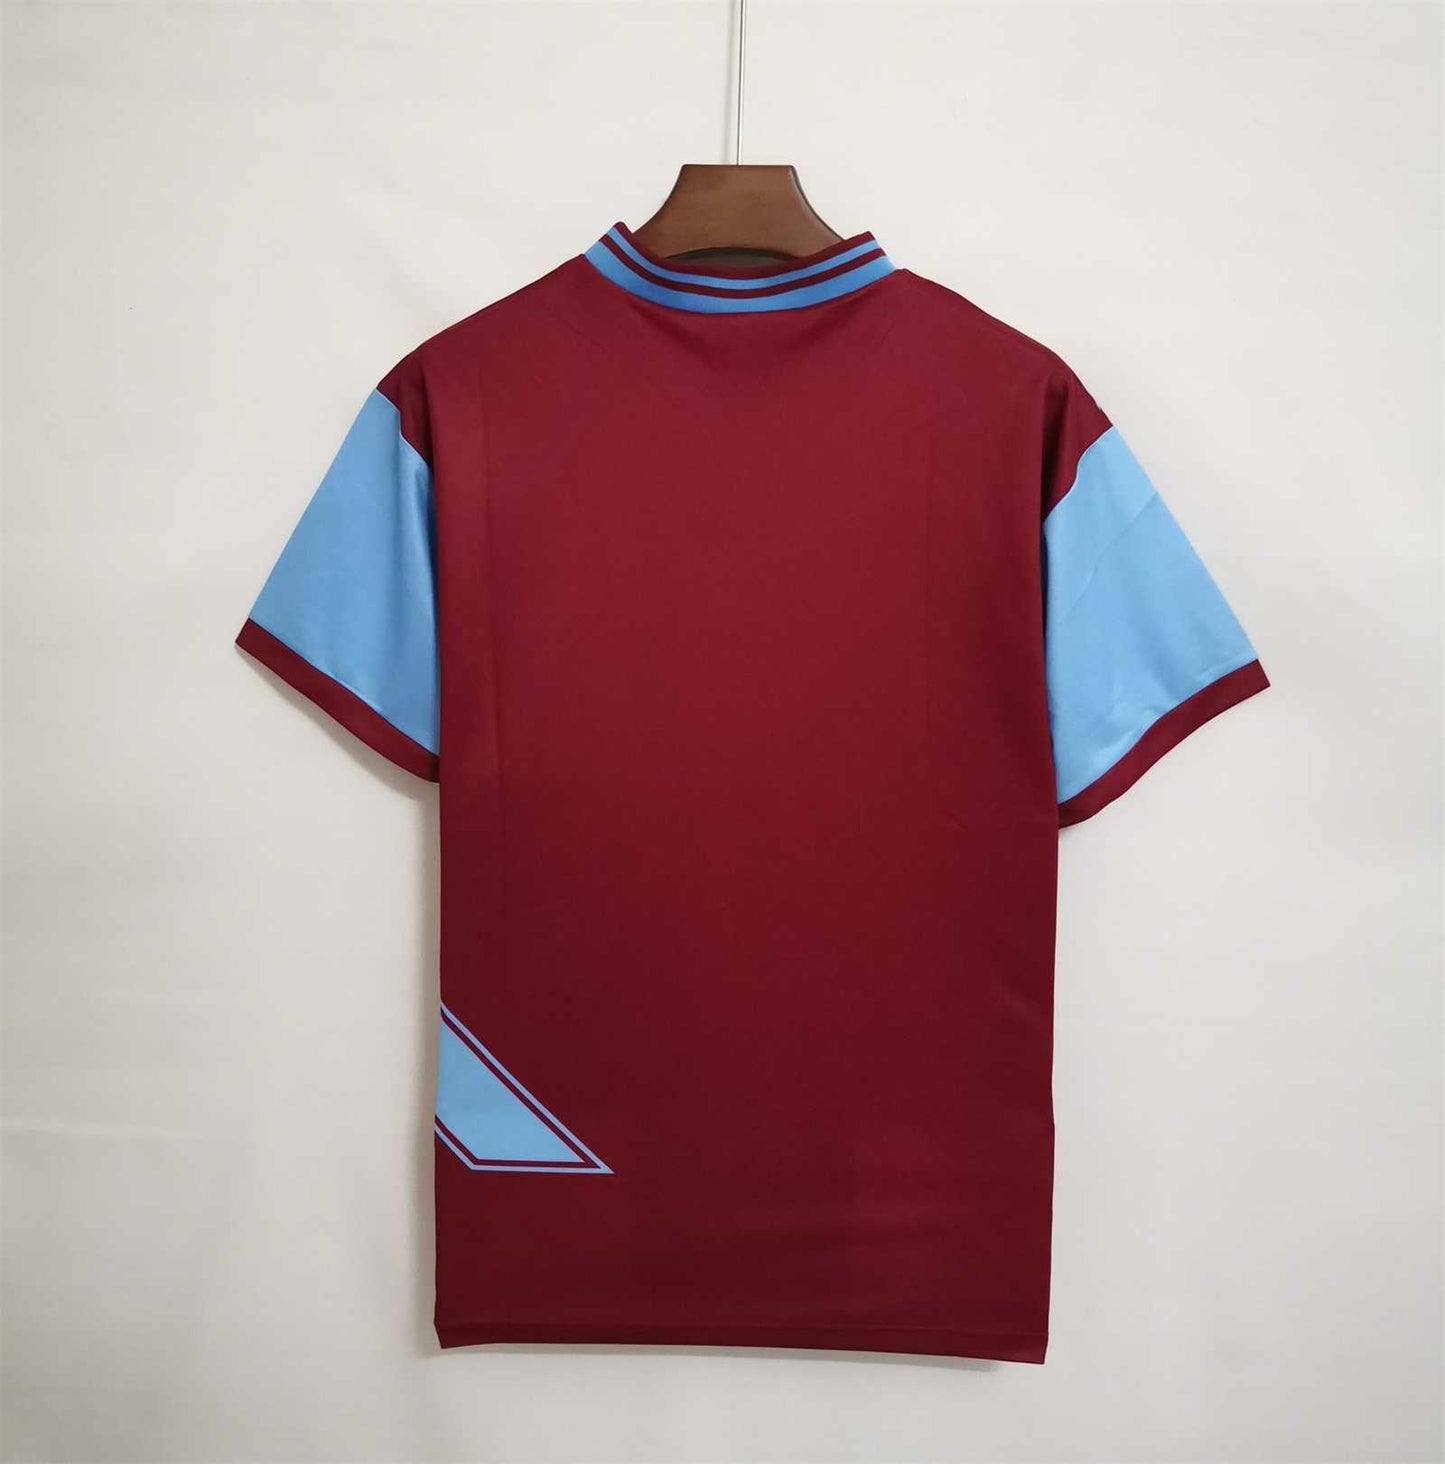 West Ham United 93-95 Home Shirt